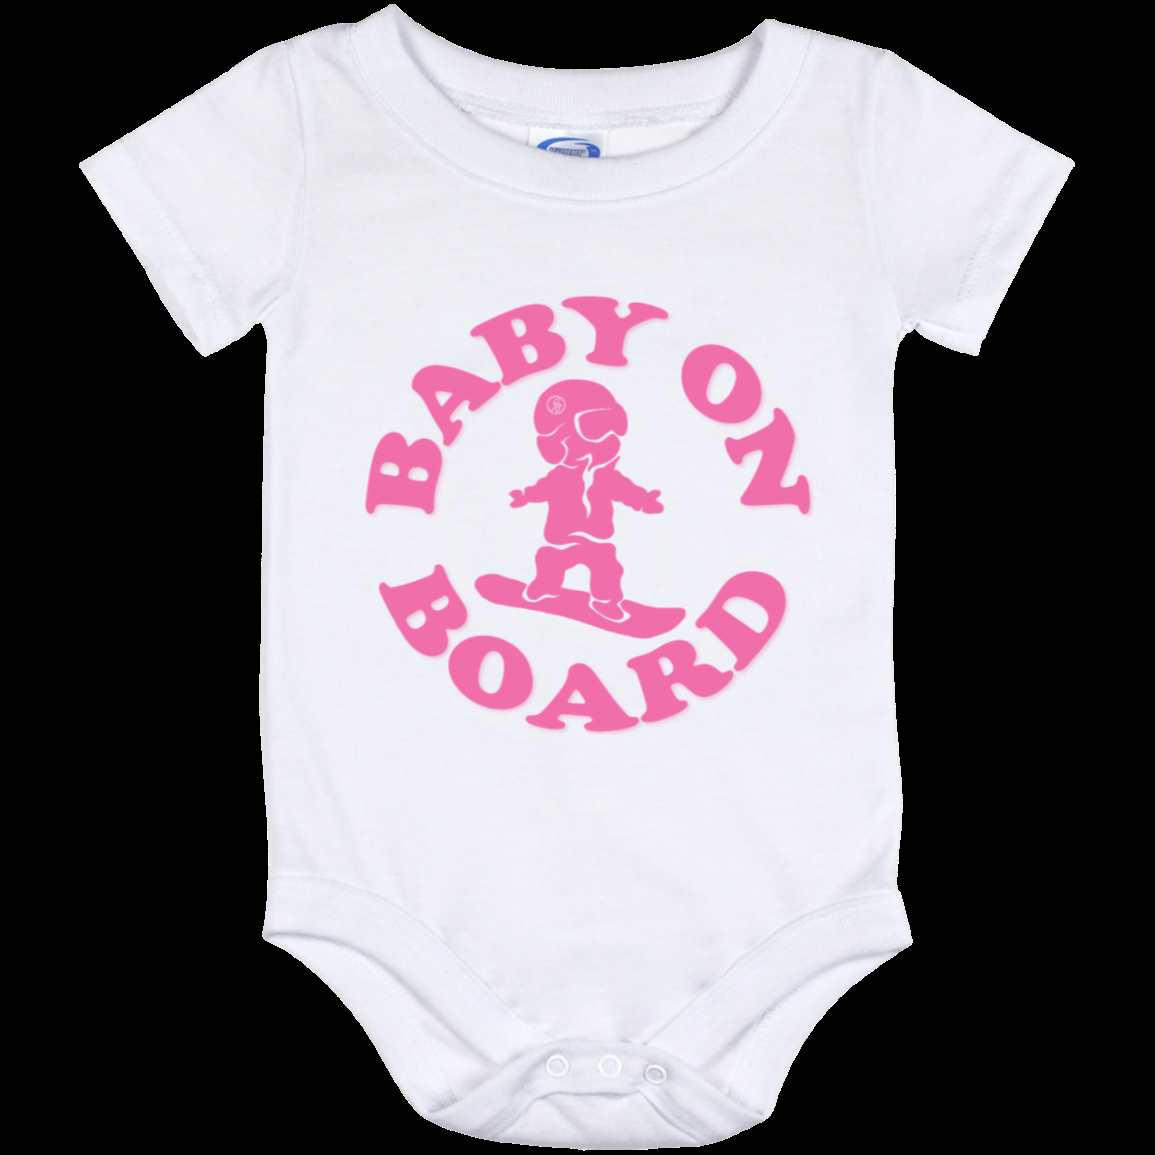 Baby On Board Pink Onesie 12 Month - ONE RUN SPORTS